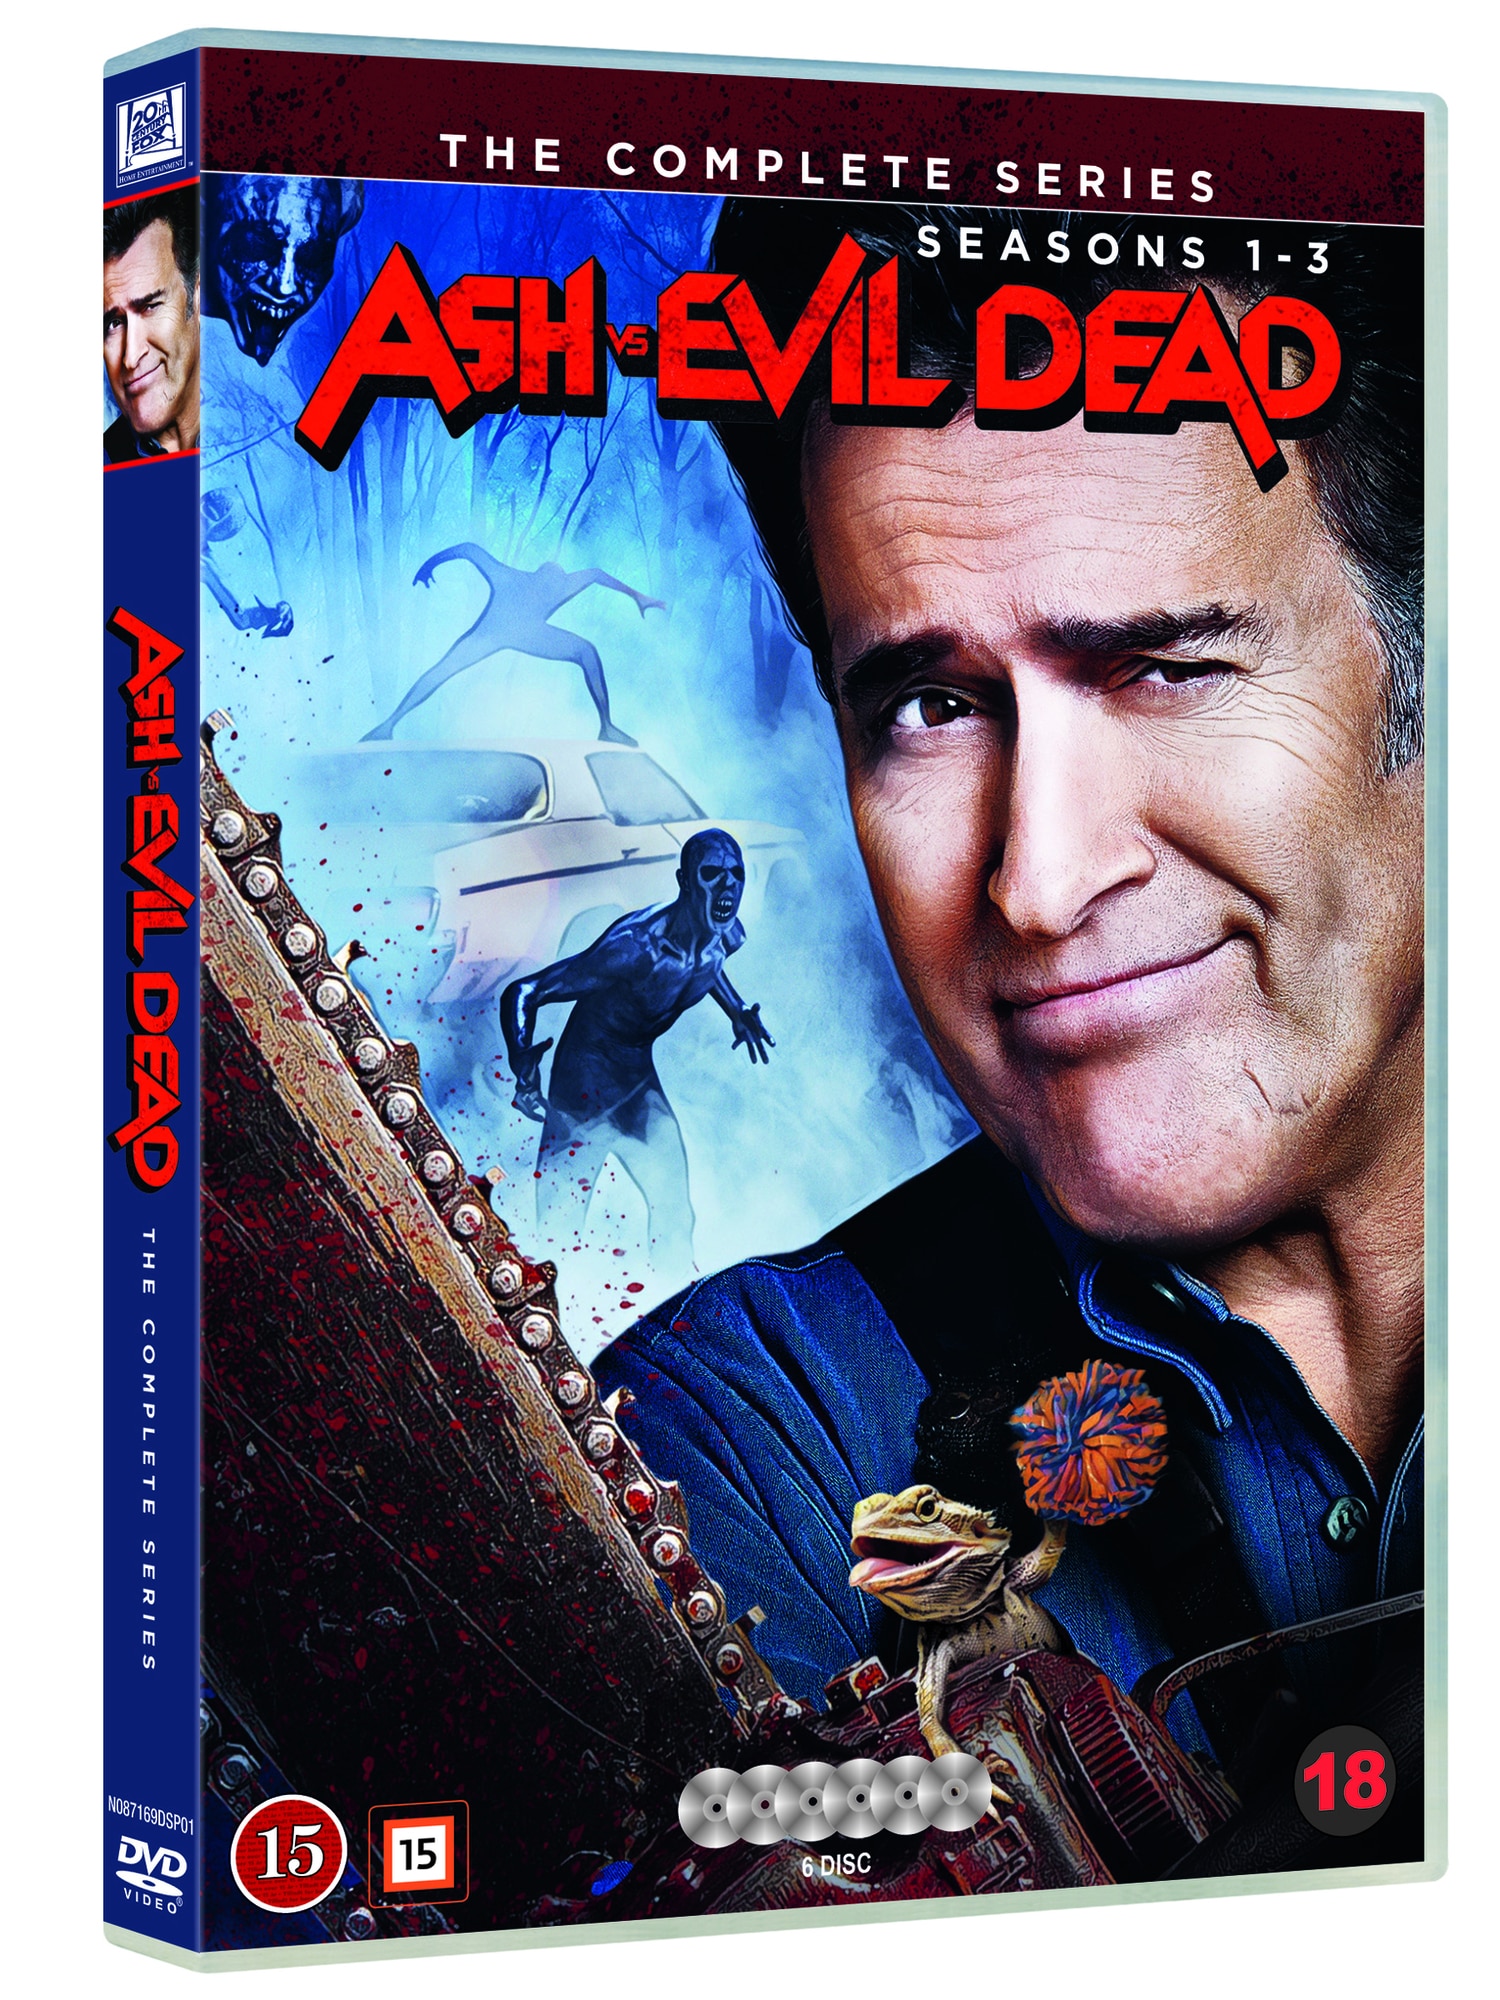 Ash vs Evil Dead S1-3 Complete Box - DVD, Twentieth Century Fox